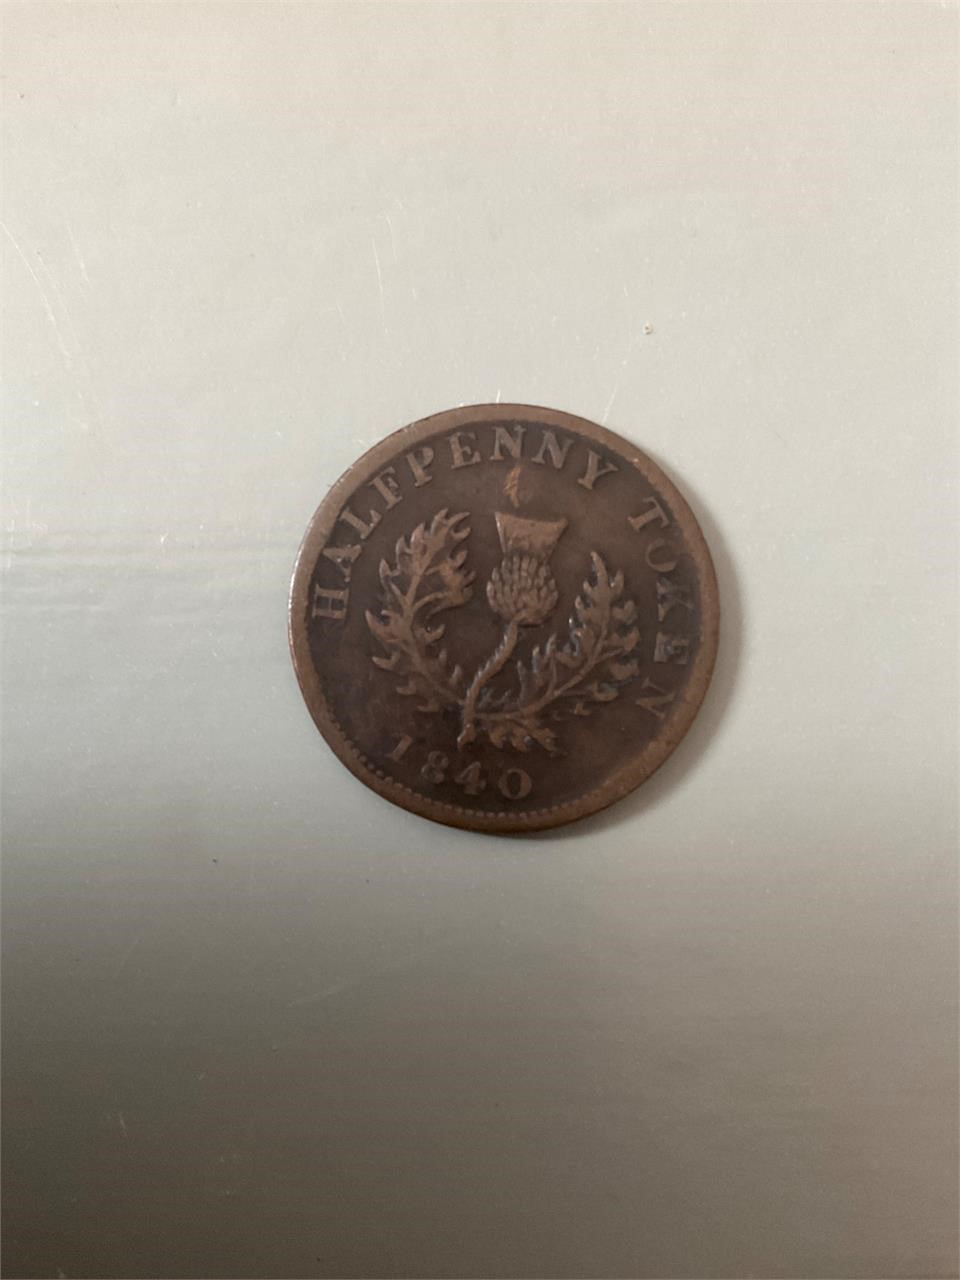 1840 Nova Scotia half penny rare condition